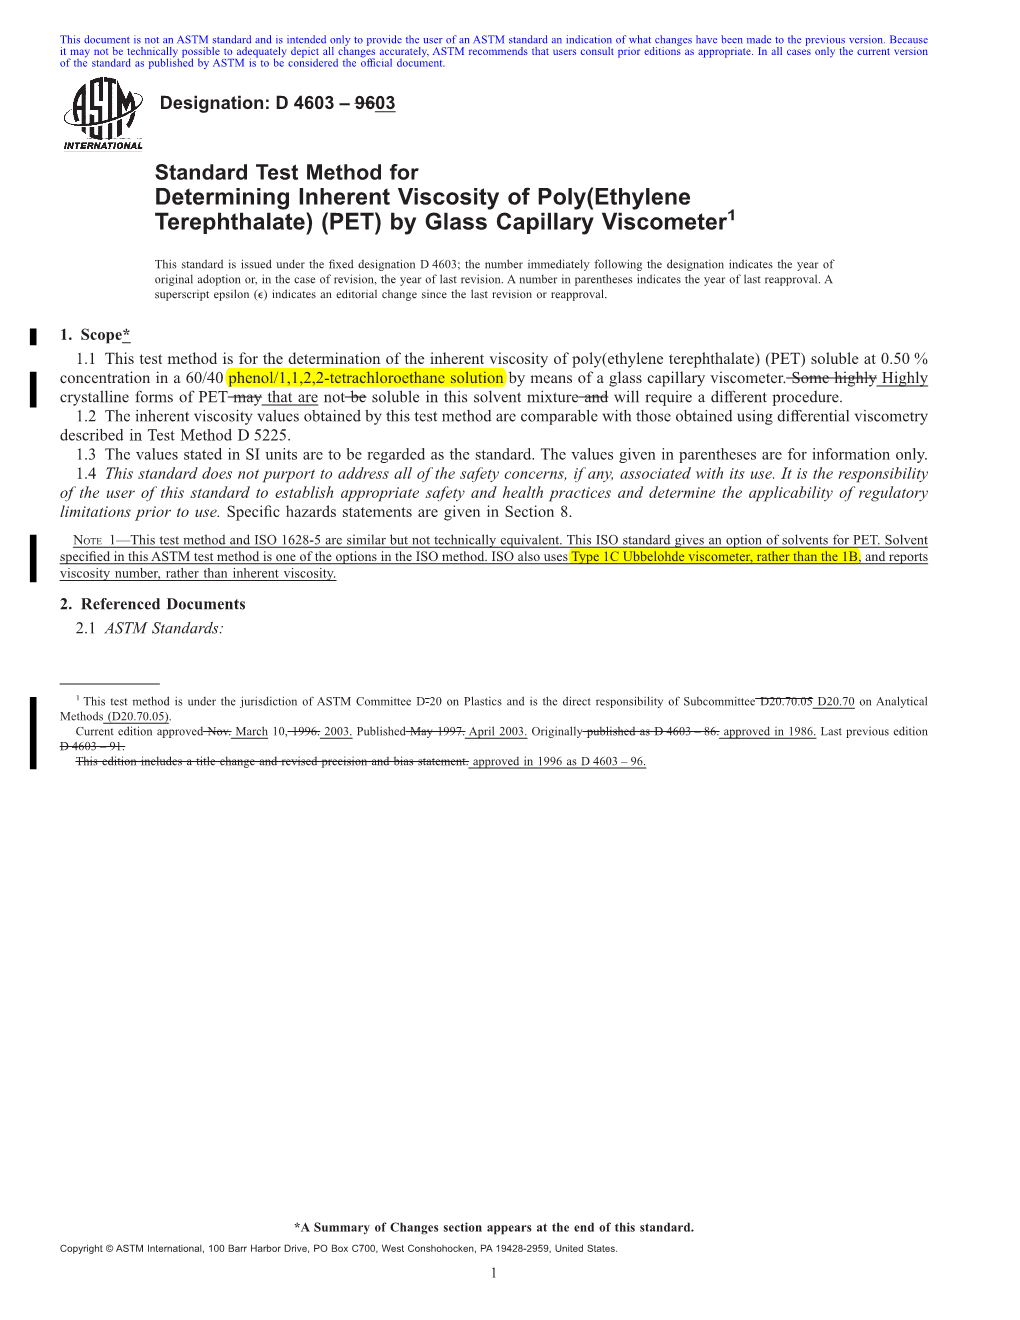 Determining Inherent Viscosity of Poly(Ethylene Terephthalate) (PET) by Glass Capillary Viscometer1